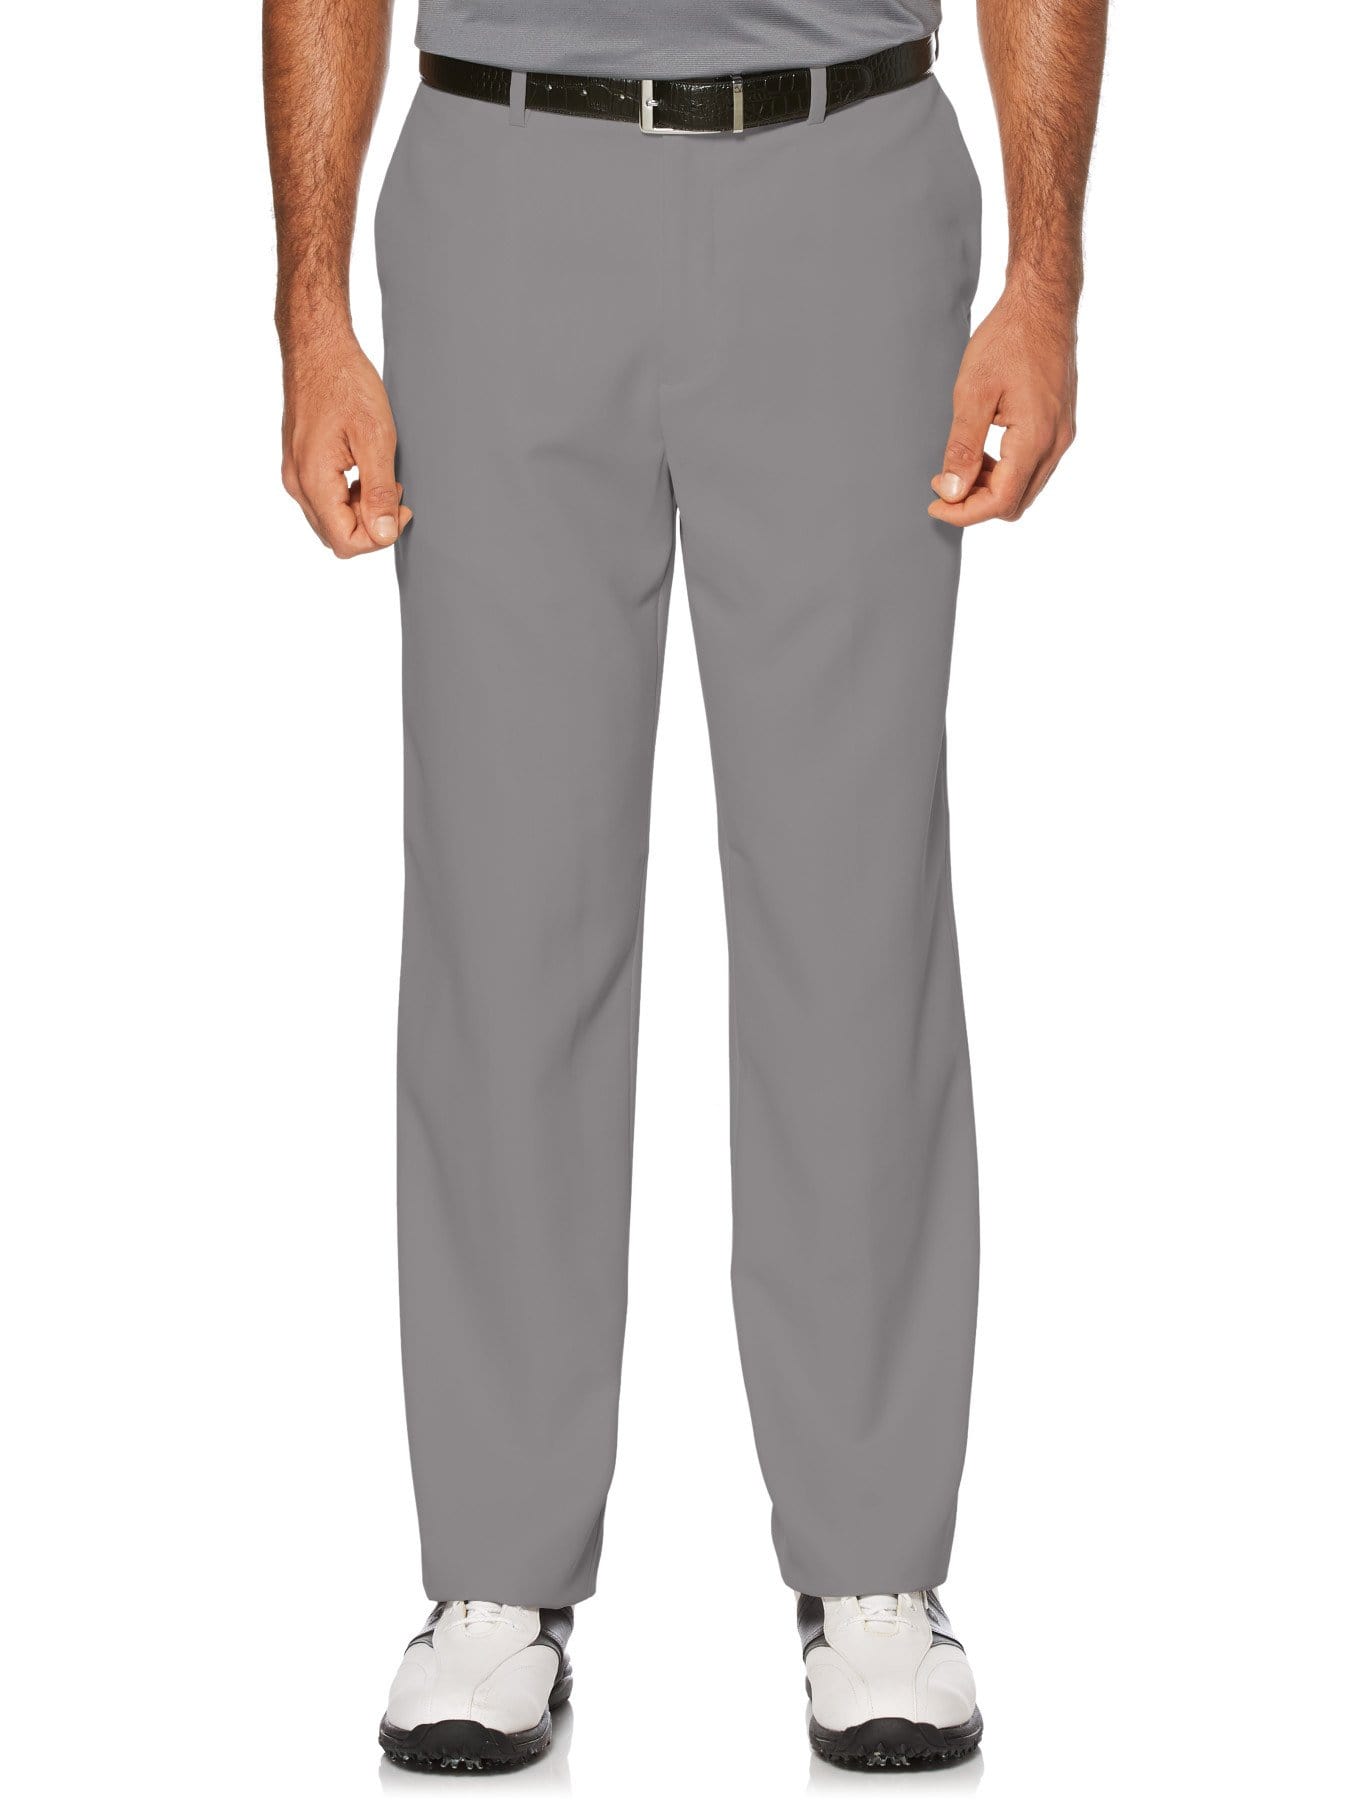 PGA TOUR Apparel Mens Flat Front Expandable Waistband Pants, Size 40 x 34, Quiet Shade Gray, 100% Polyester | Golf Apparel Shop